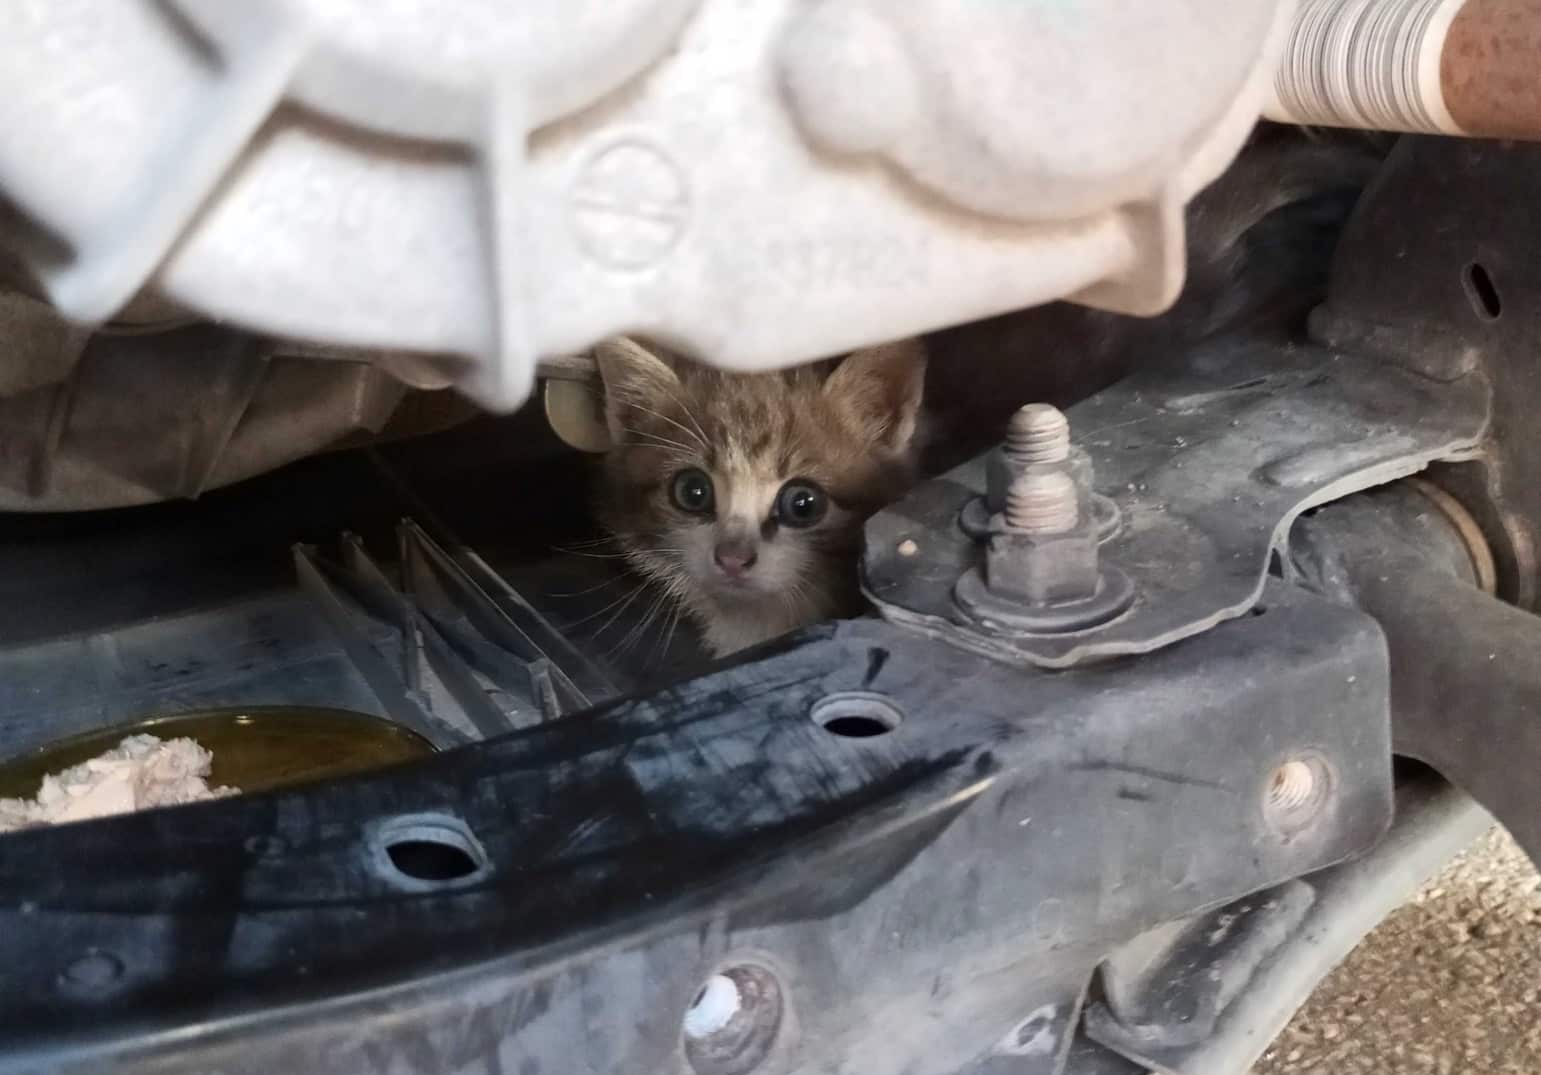 Volontari pratesi salvano gattini intrappolati nel motore d'auto.